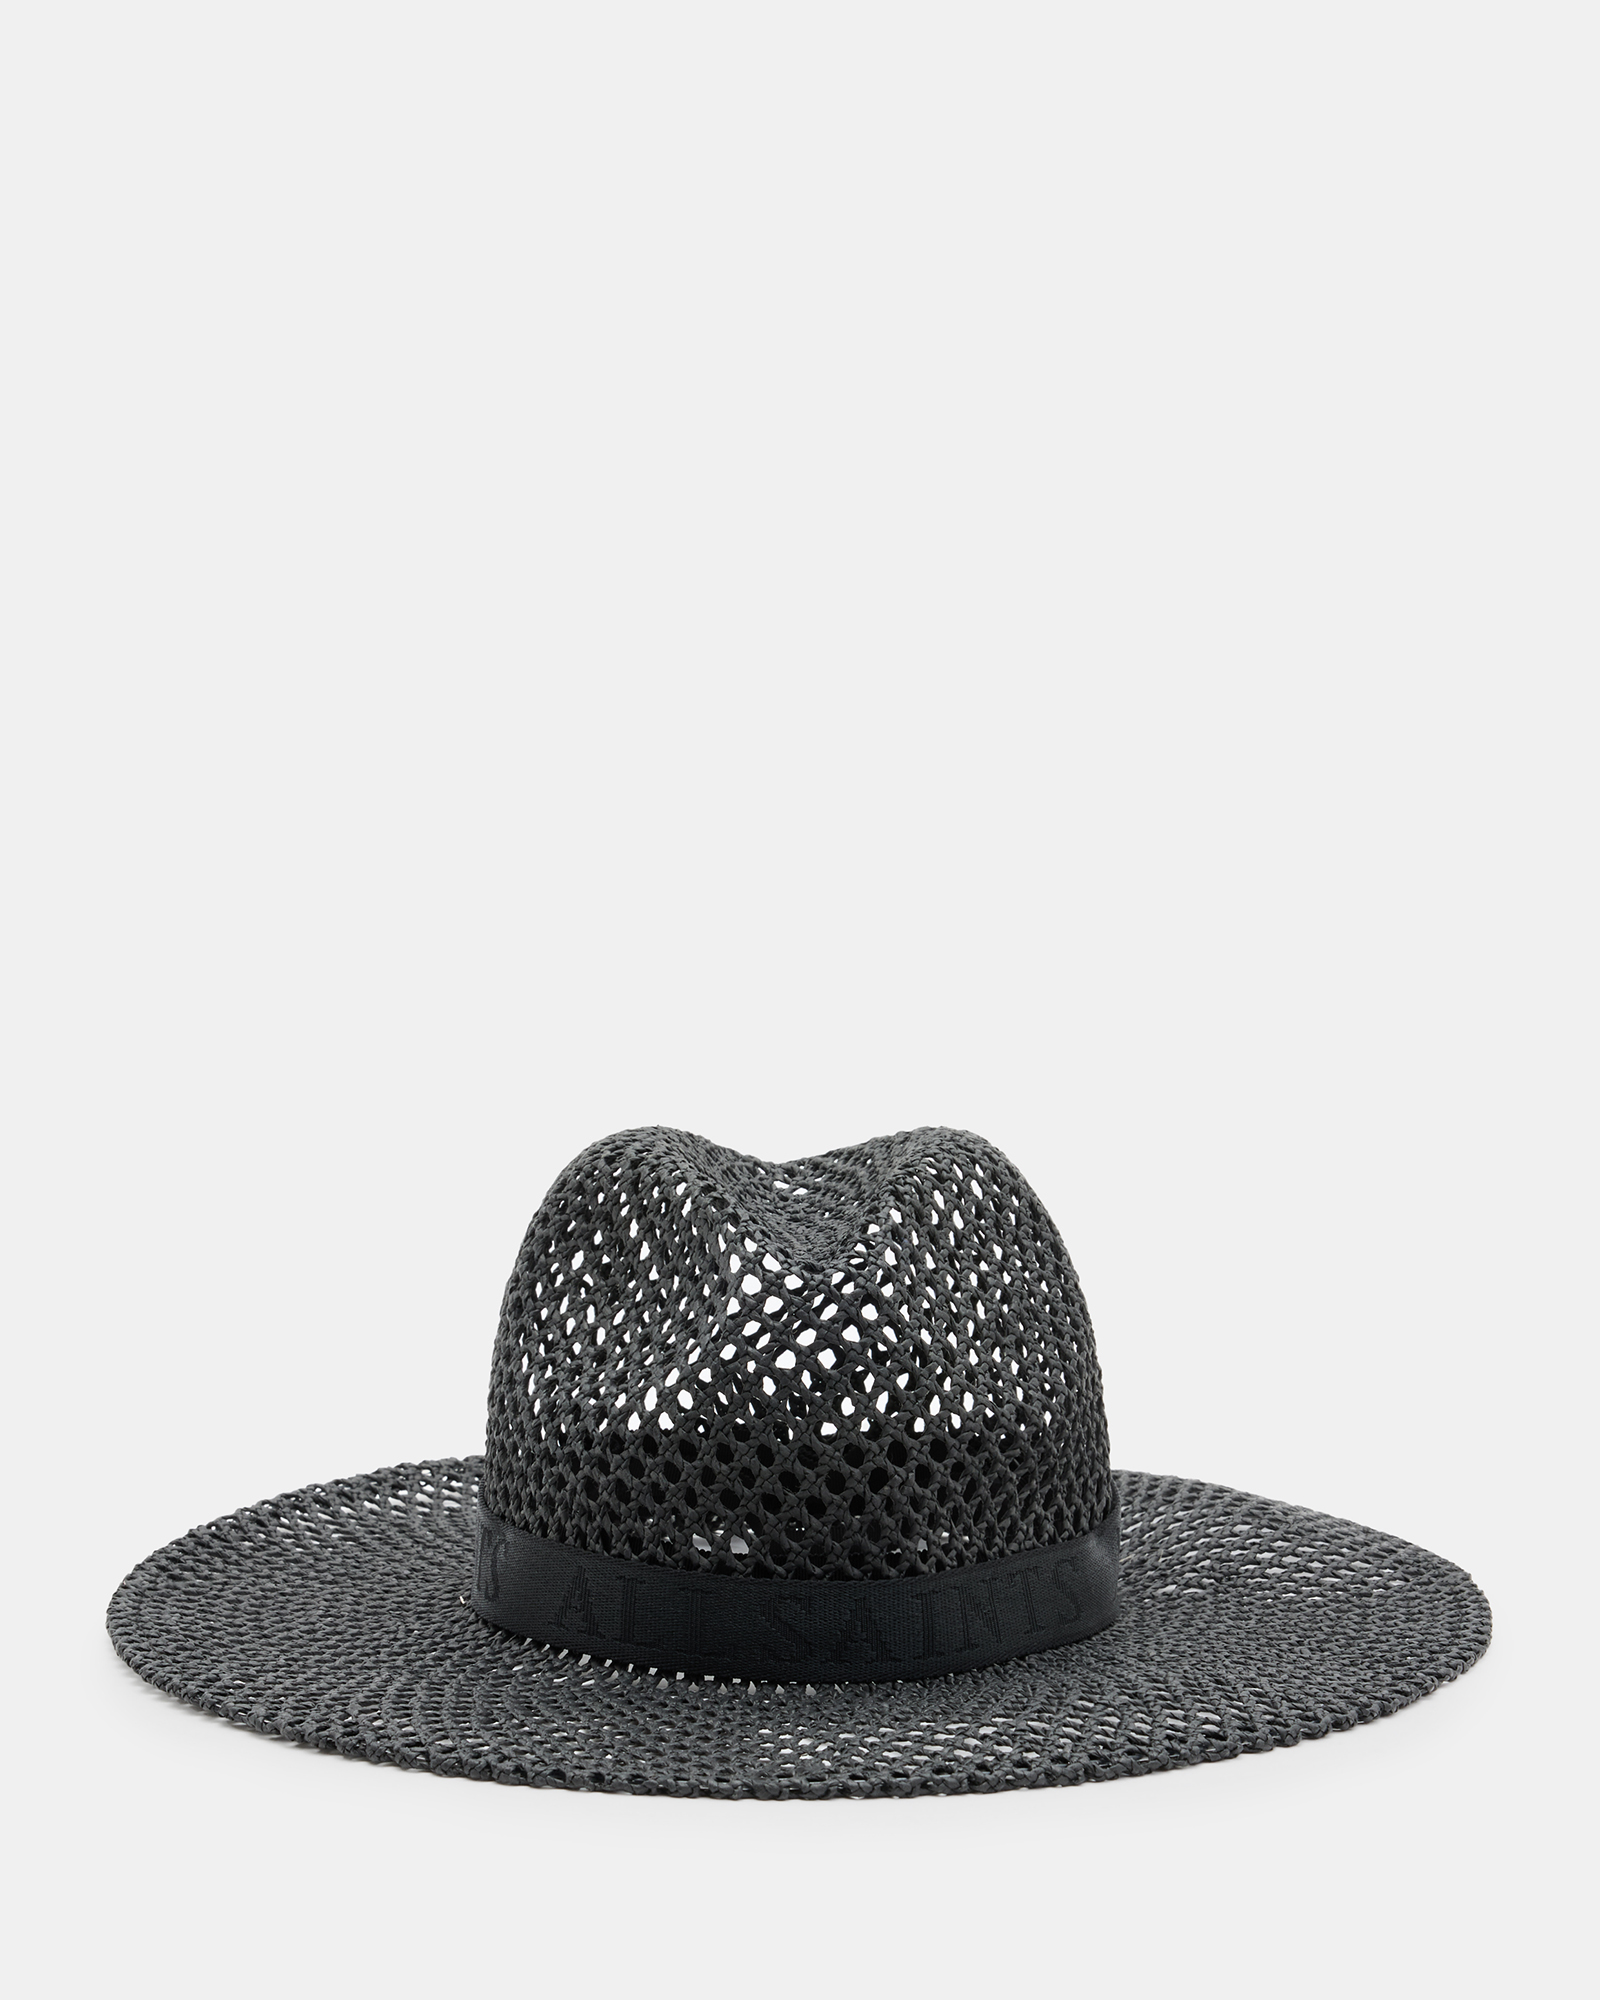 AllSaints Suvi Straw Fedora Hat,, Size: One